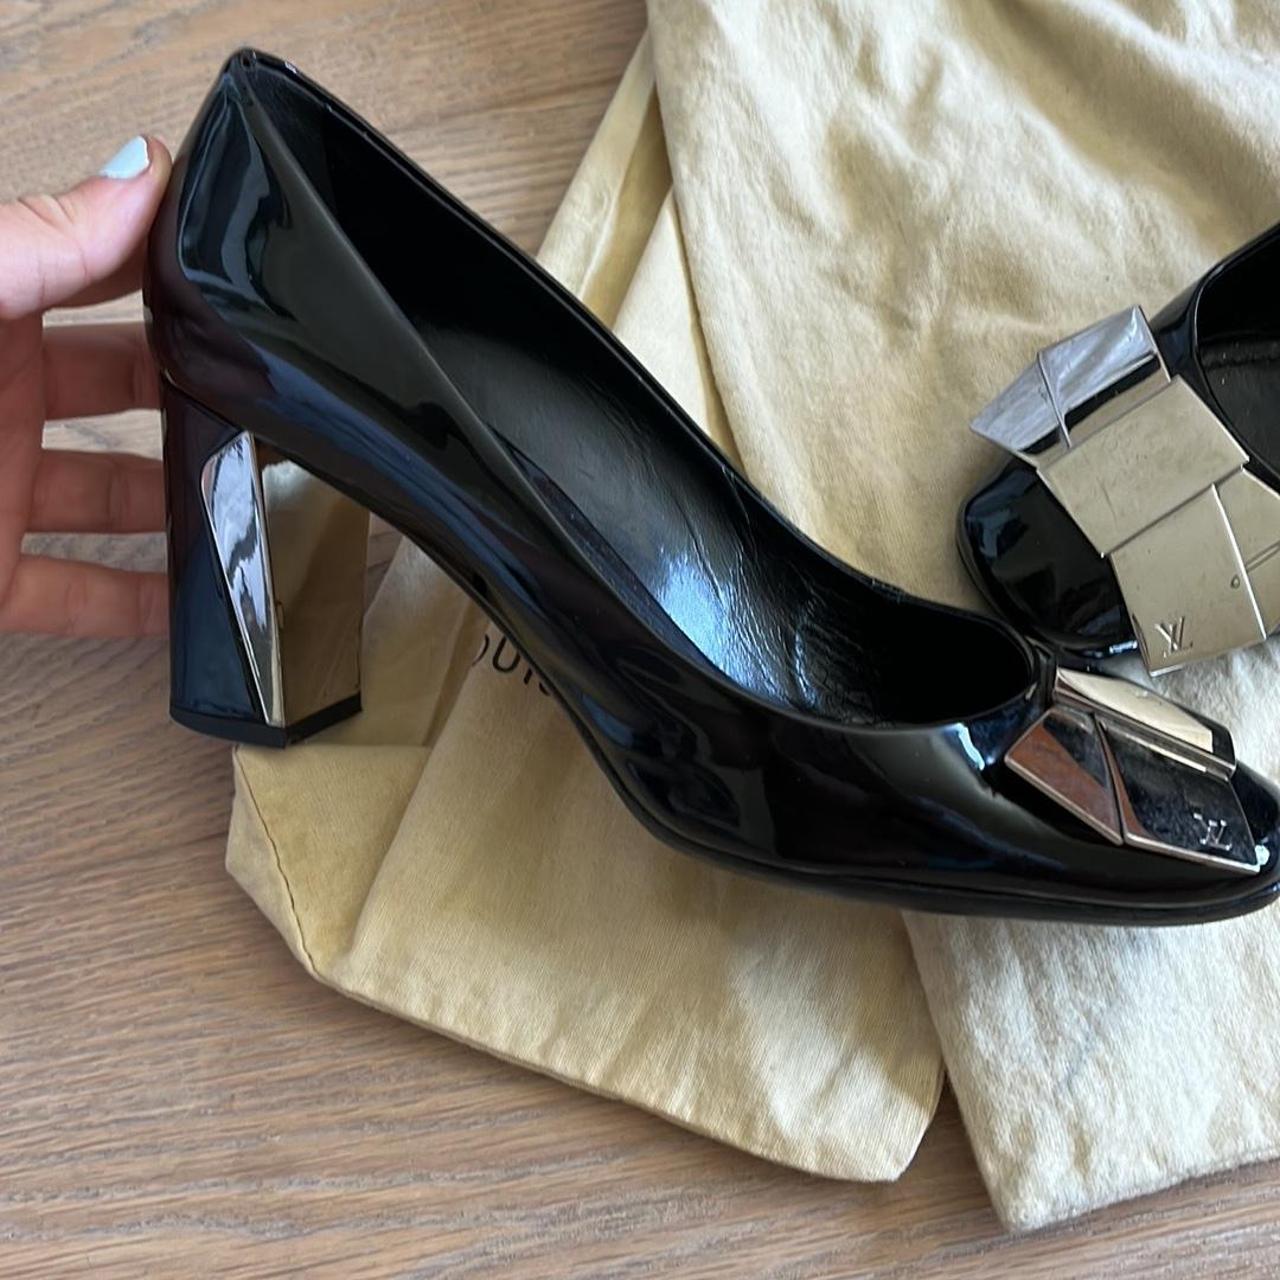 Louis Vuitton vintage heels 🌻 Bought in the 90's, - Depop